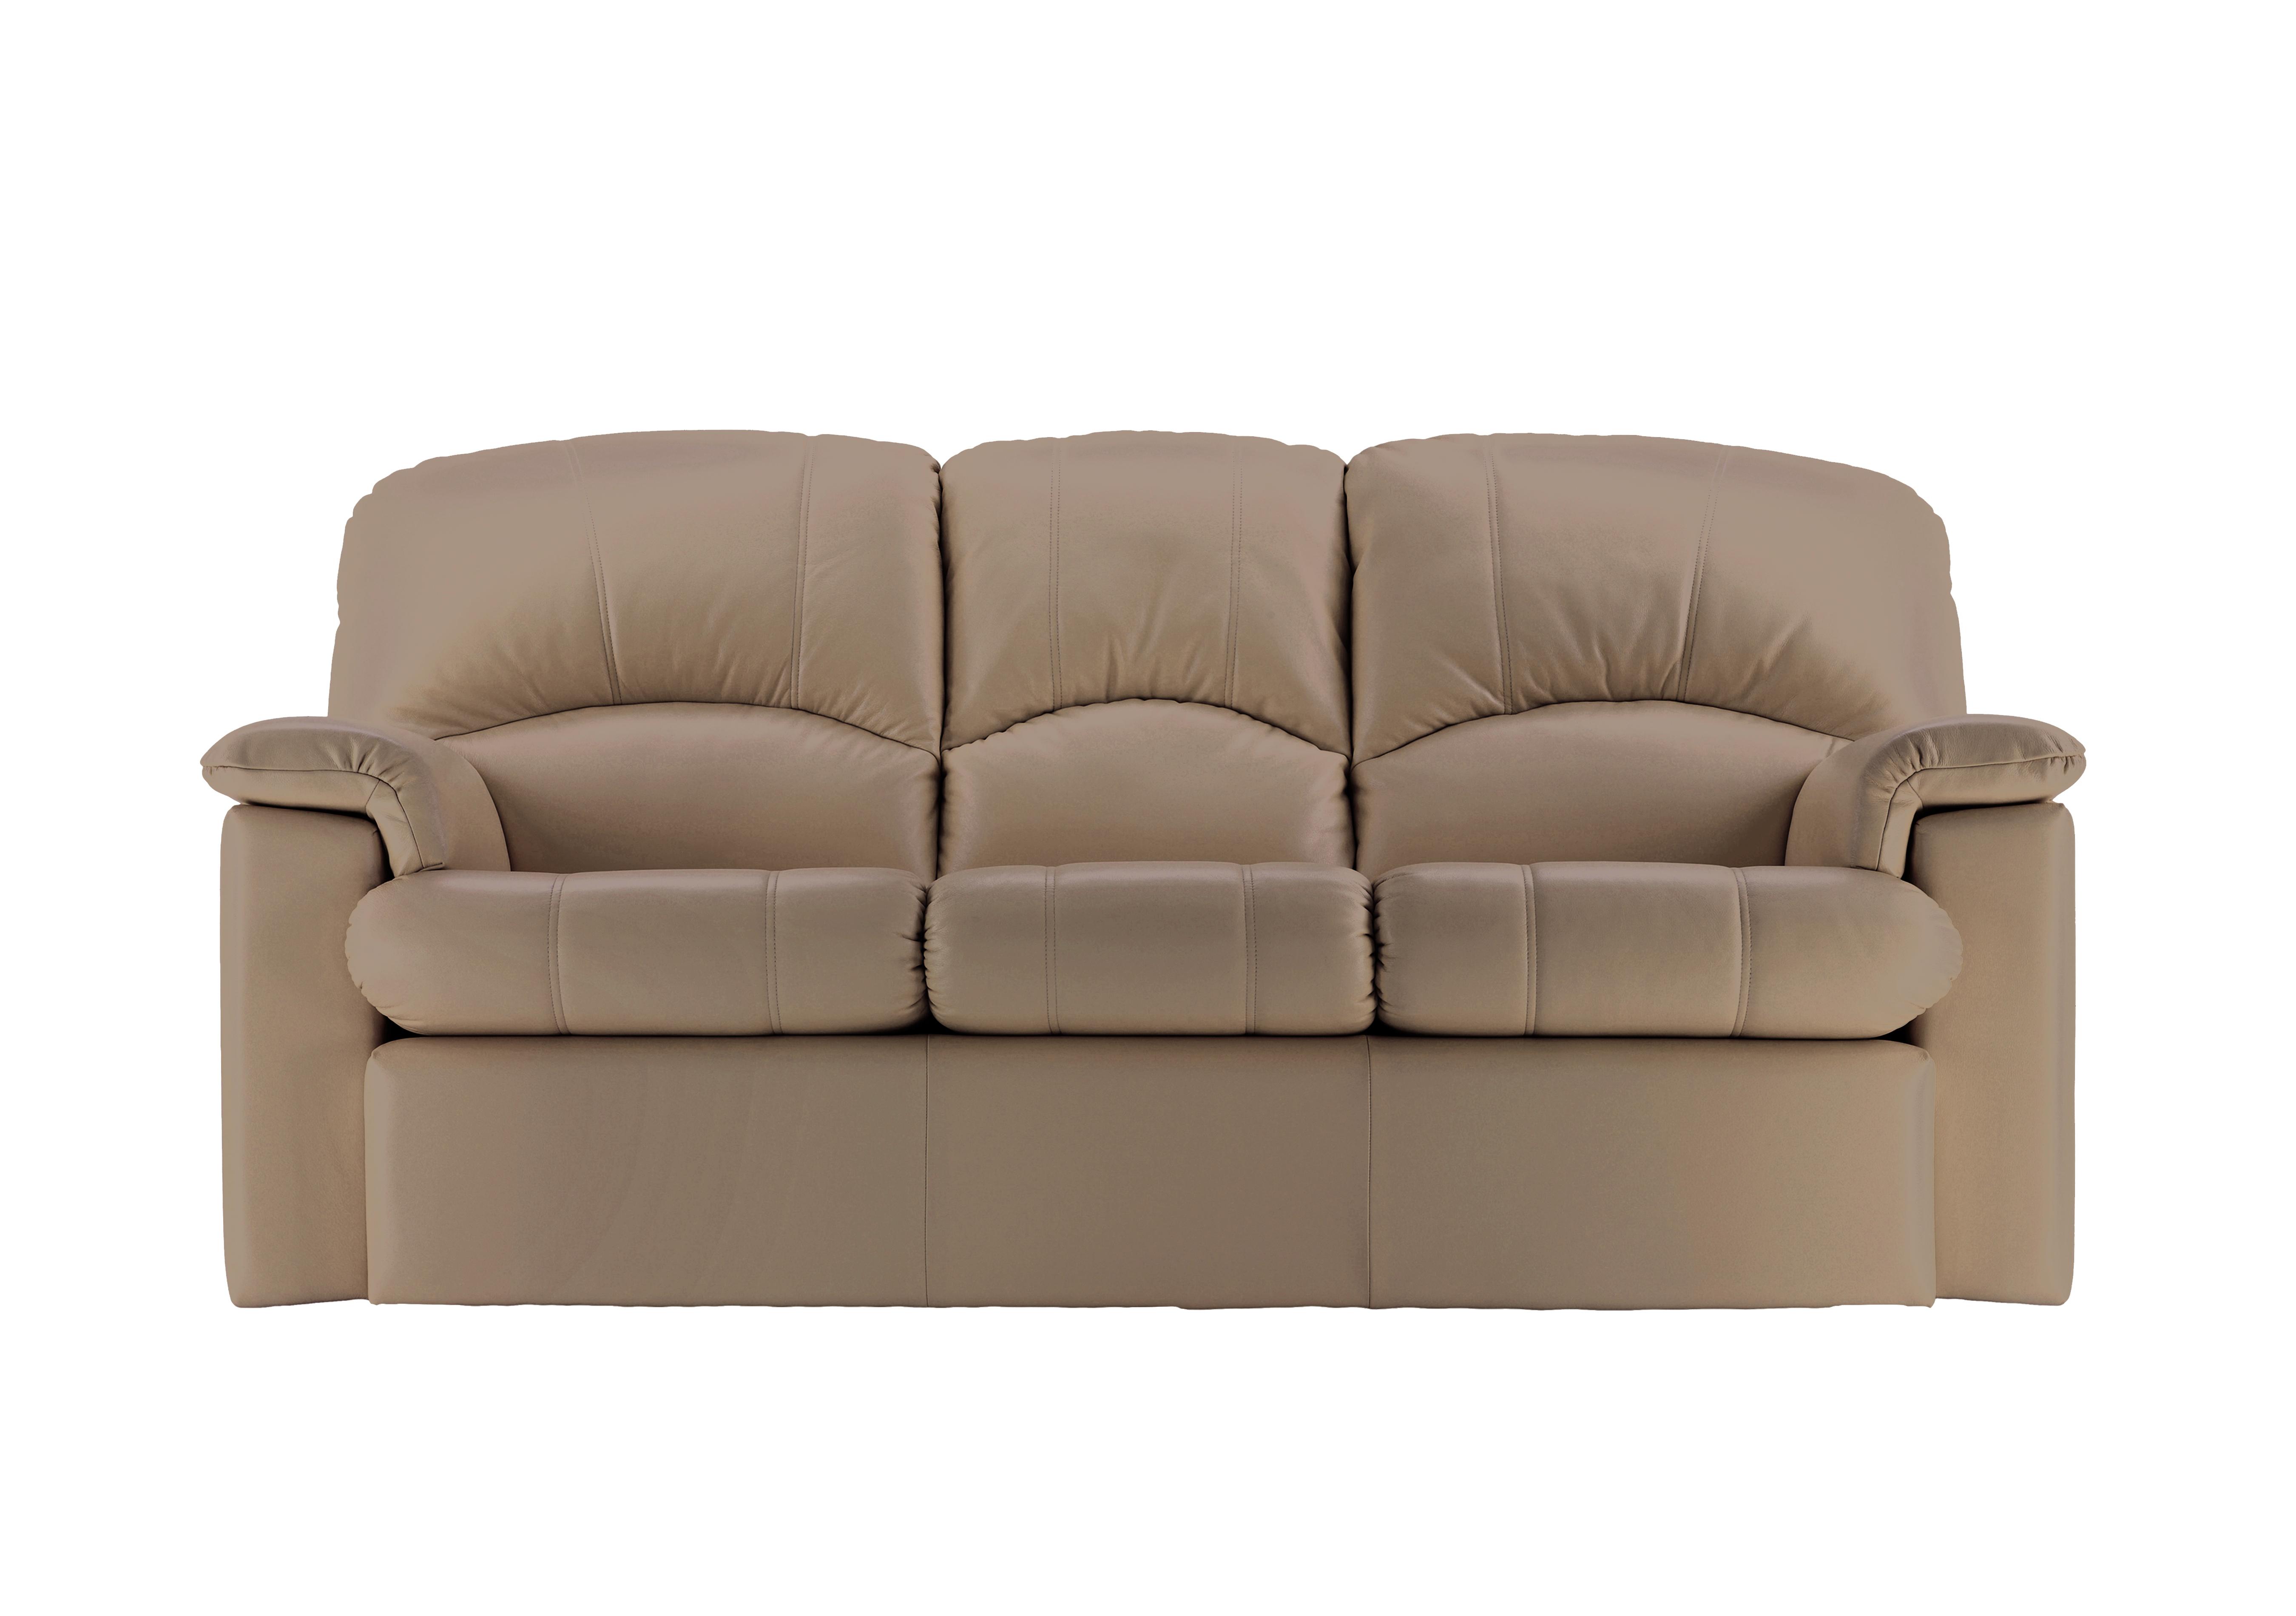 Chloe 3 Seater Leather Sofa in P216 Capri Mushroom on Furniture Village